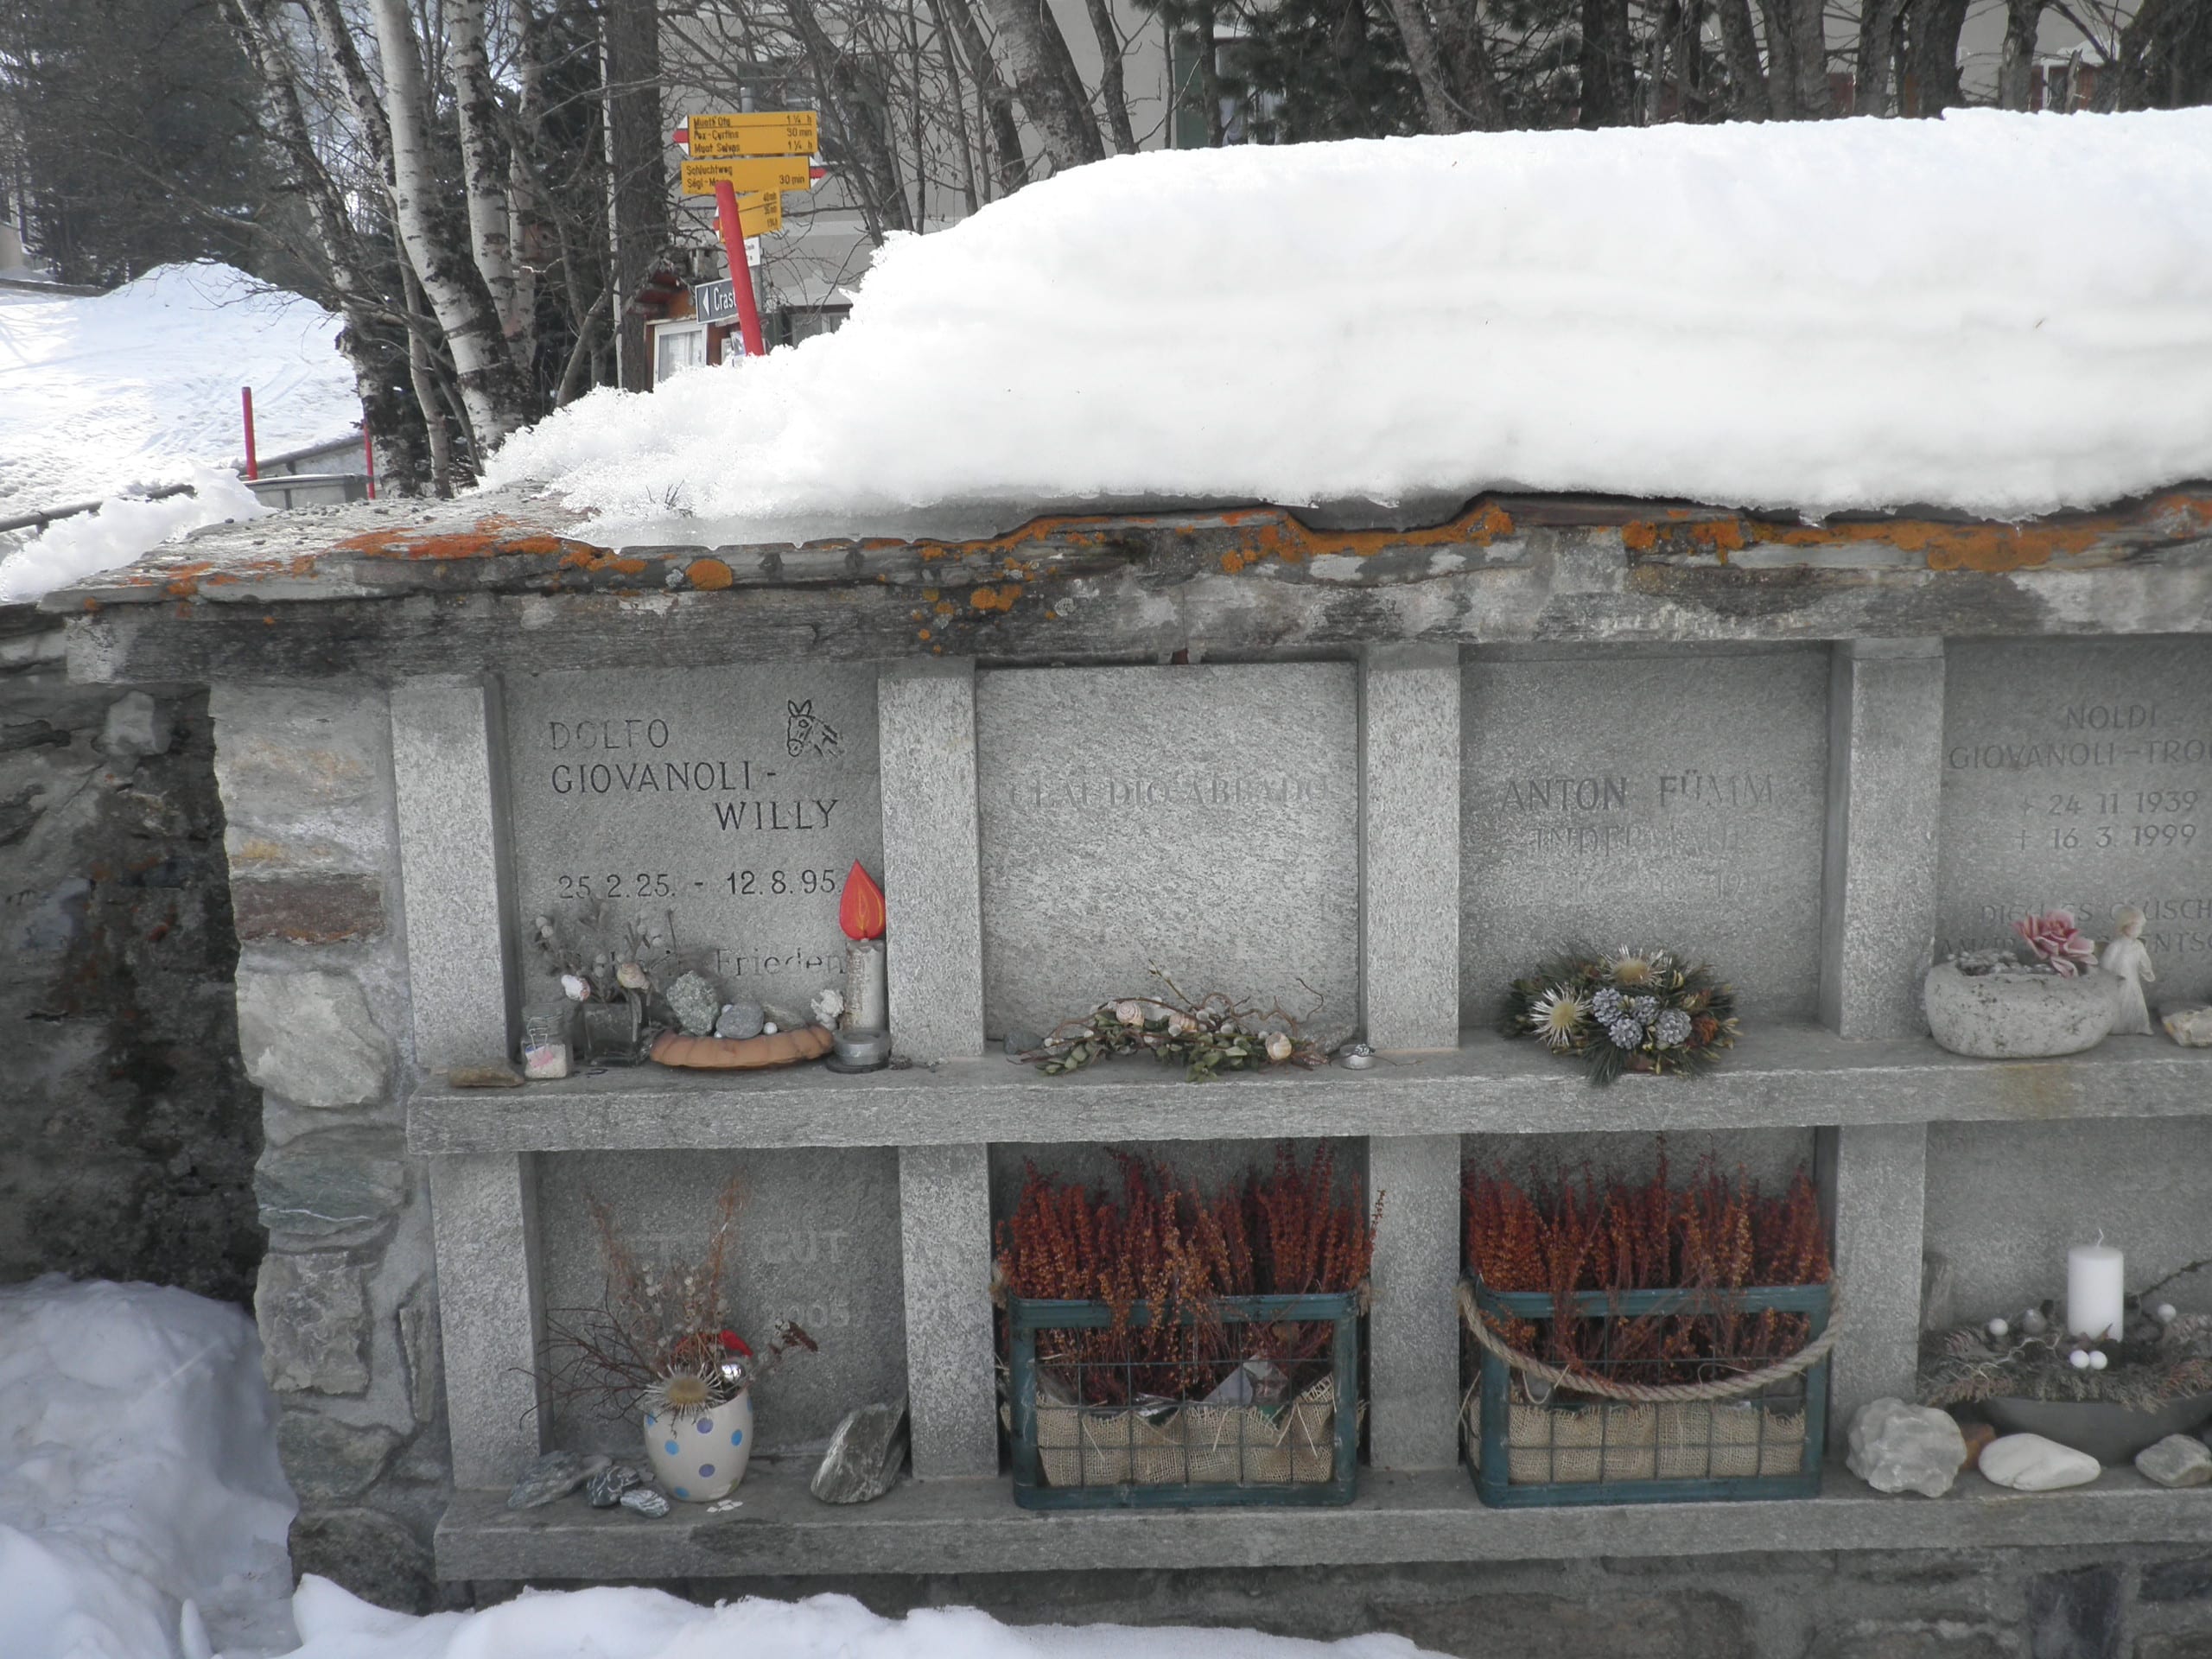 Claudio Abbado’s grave is also fading away